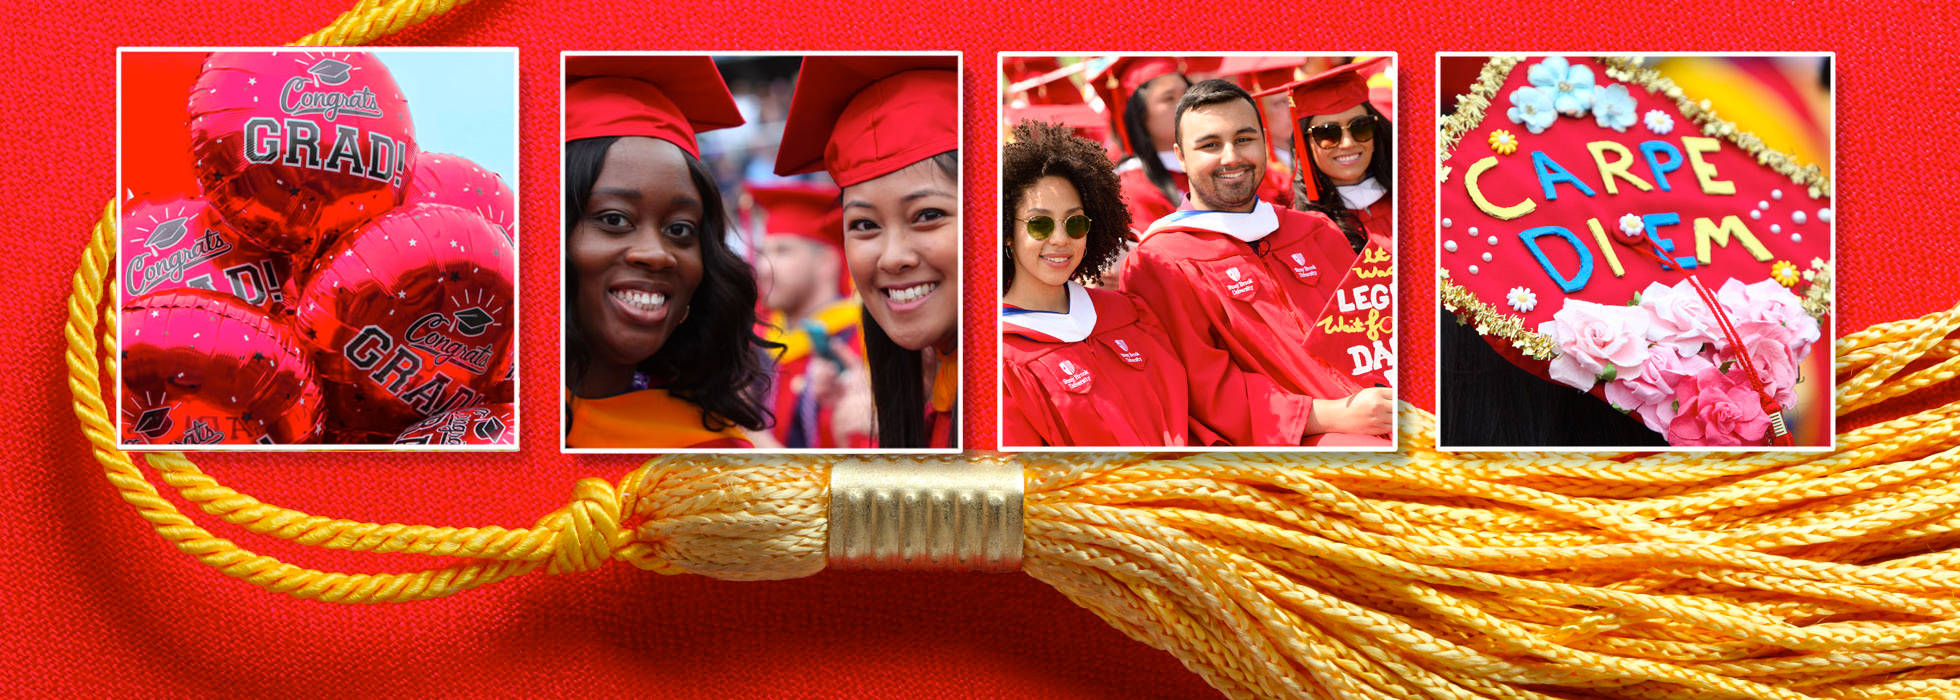 Picture of graduates, graduation cap, tassle and balloons